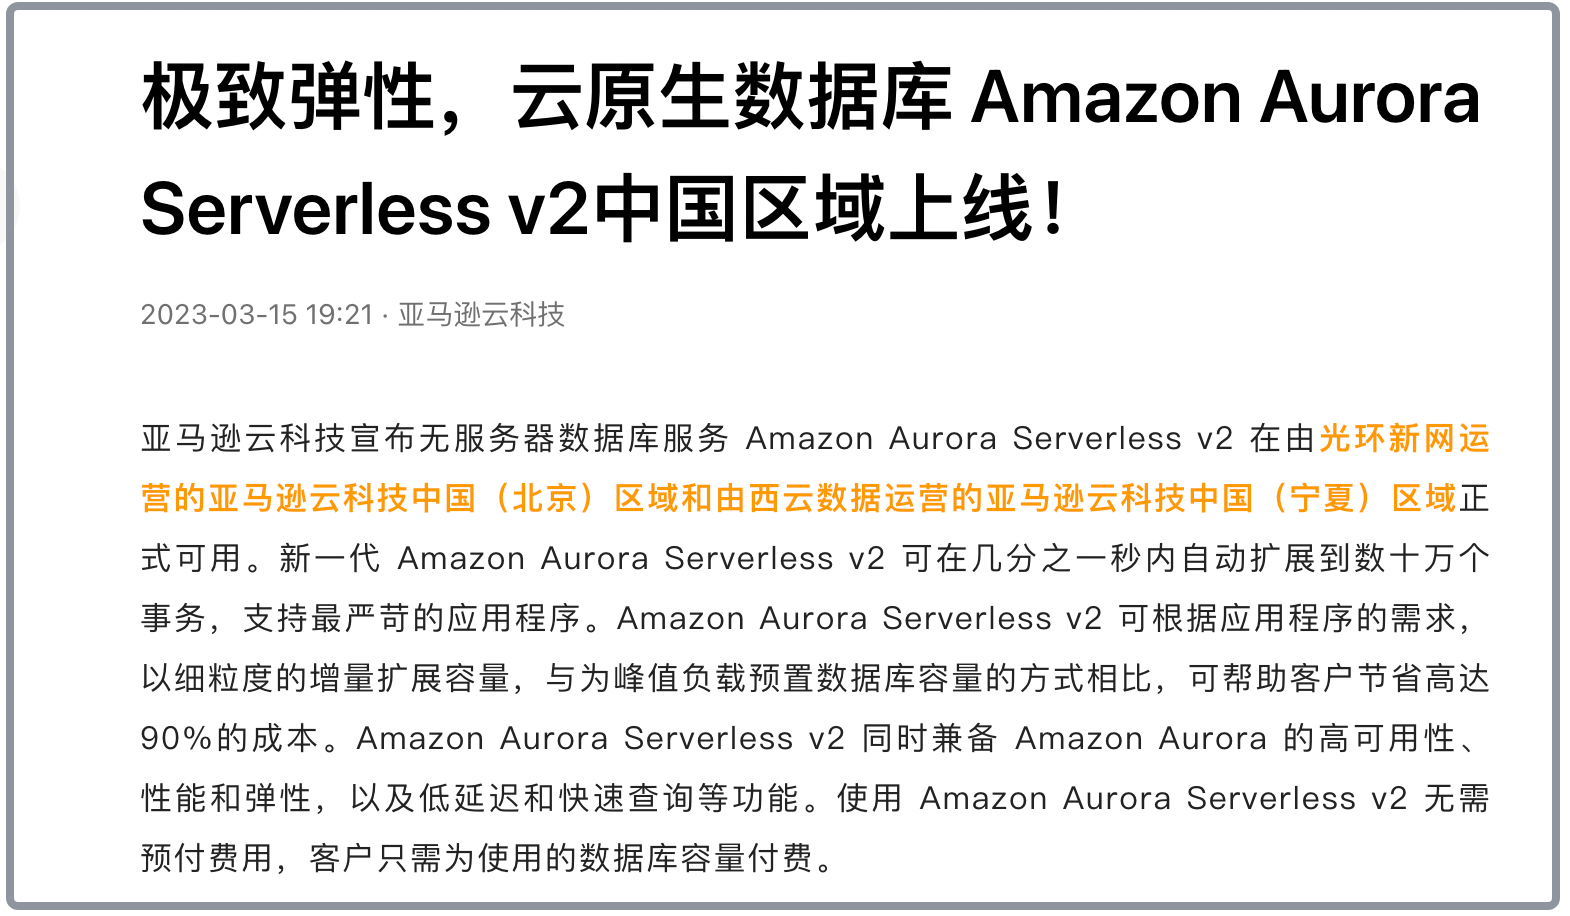 Amazon Aurora Serverless v2在中国区域上线.png